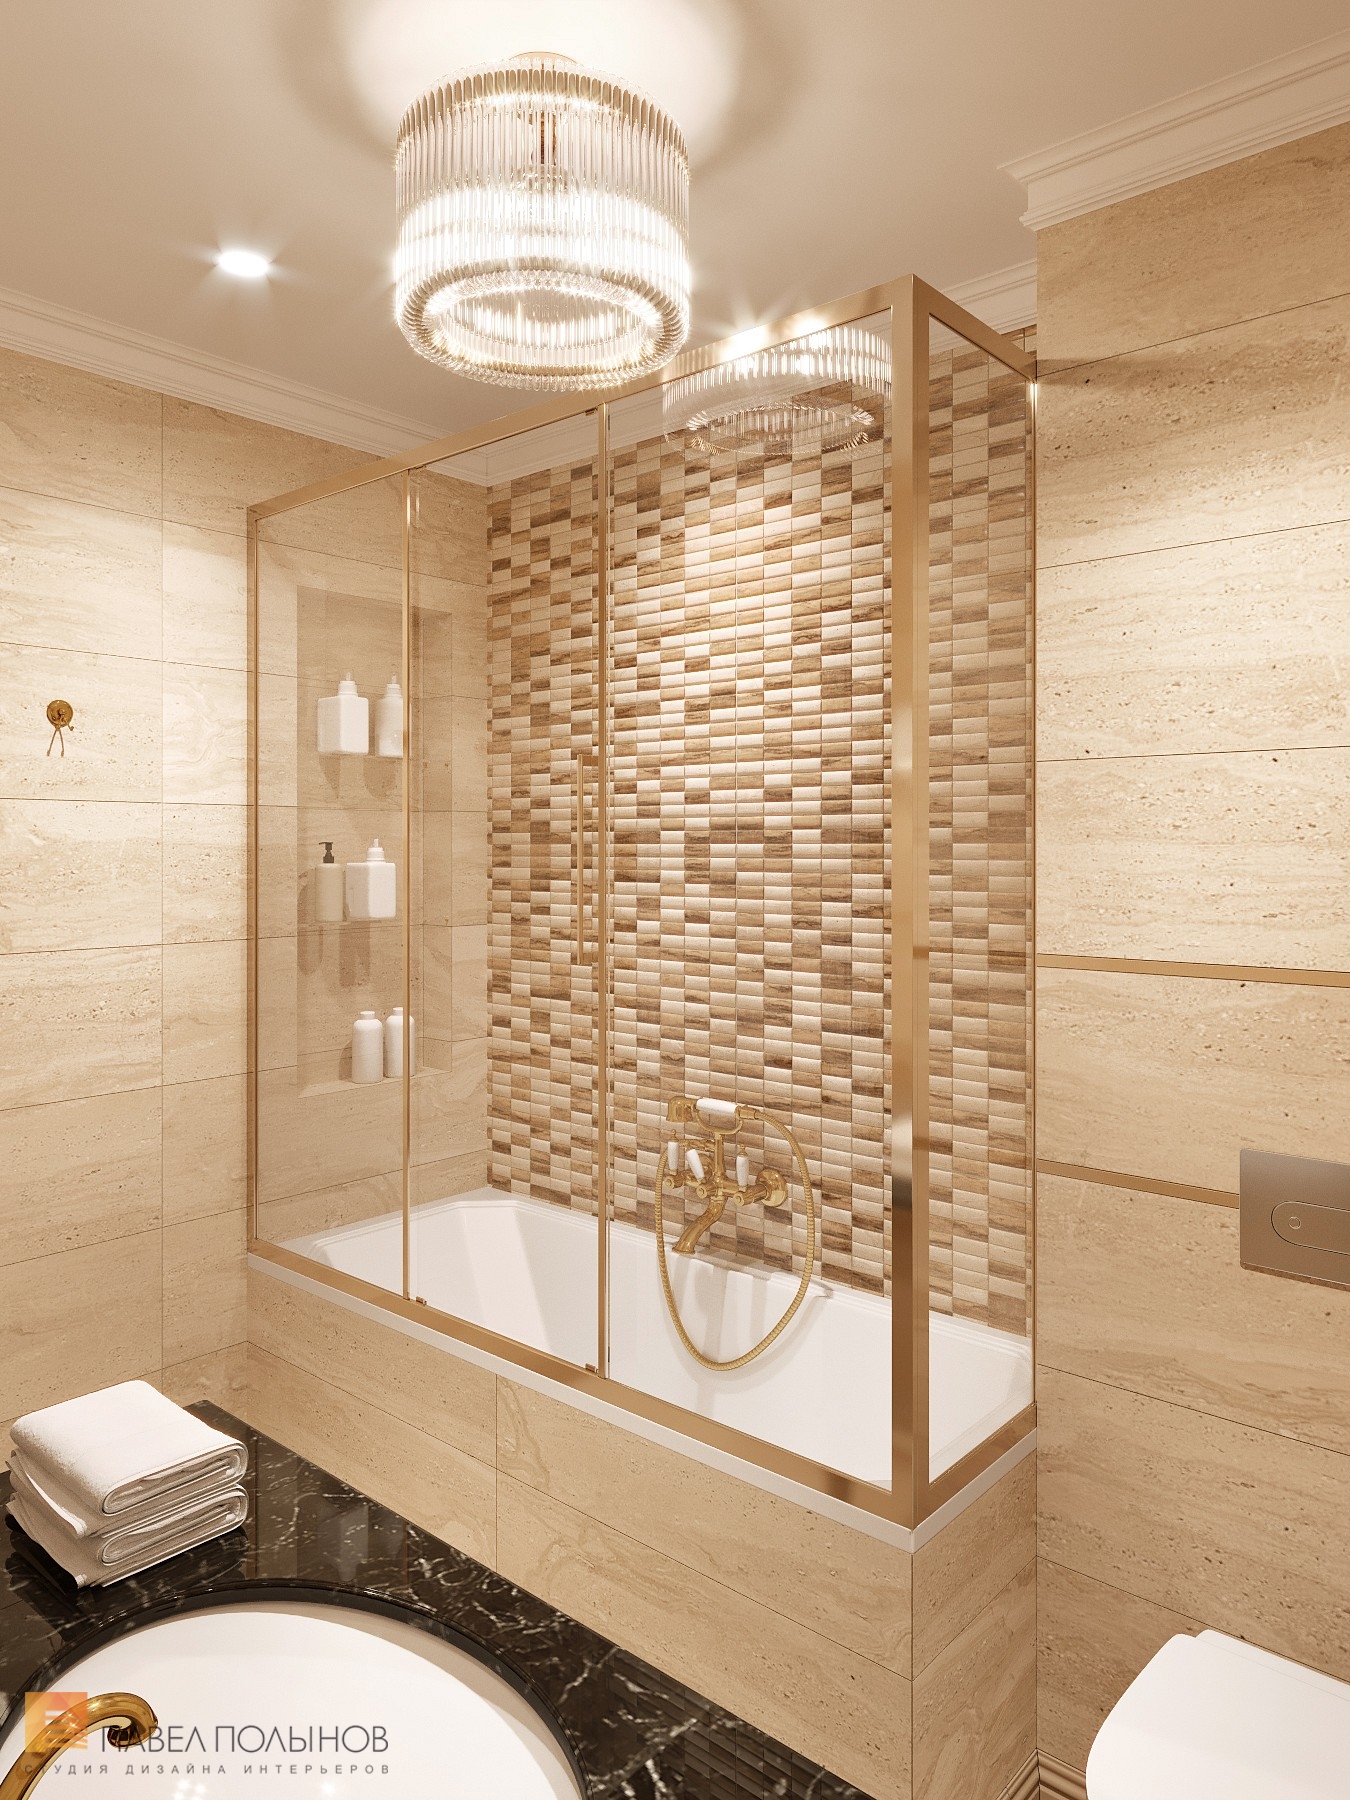 Фото интерьер ванной комнаты из проекта «Интерьер квартиры 140 кв.м. в стиле неоклассики»